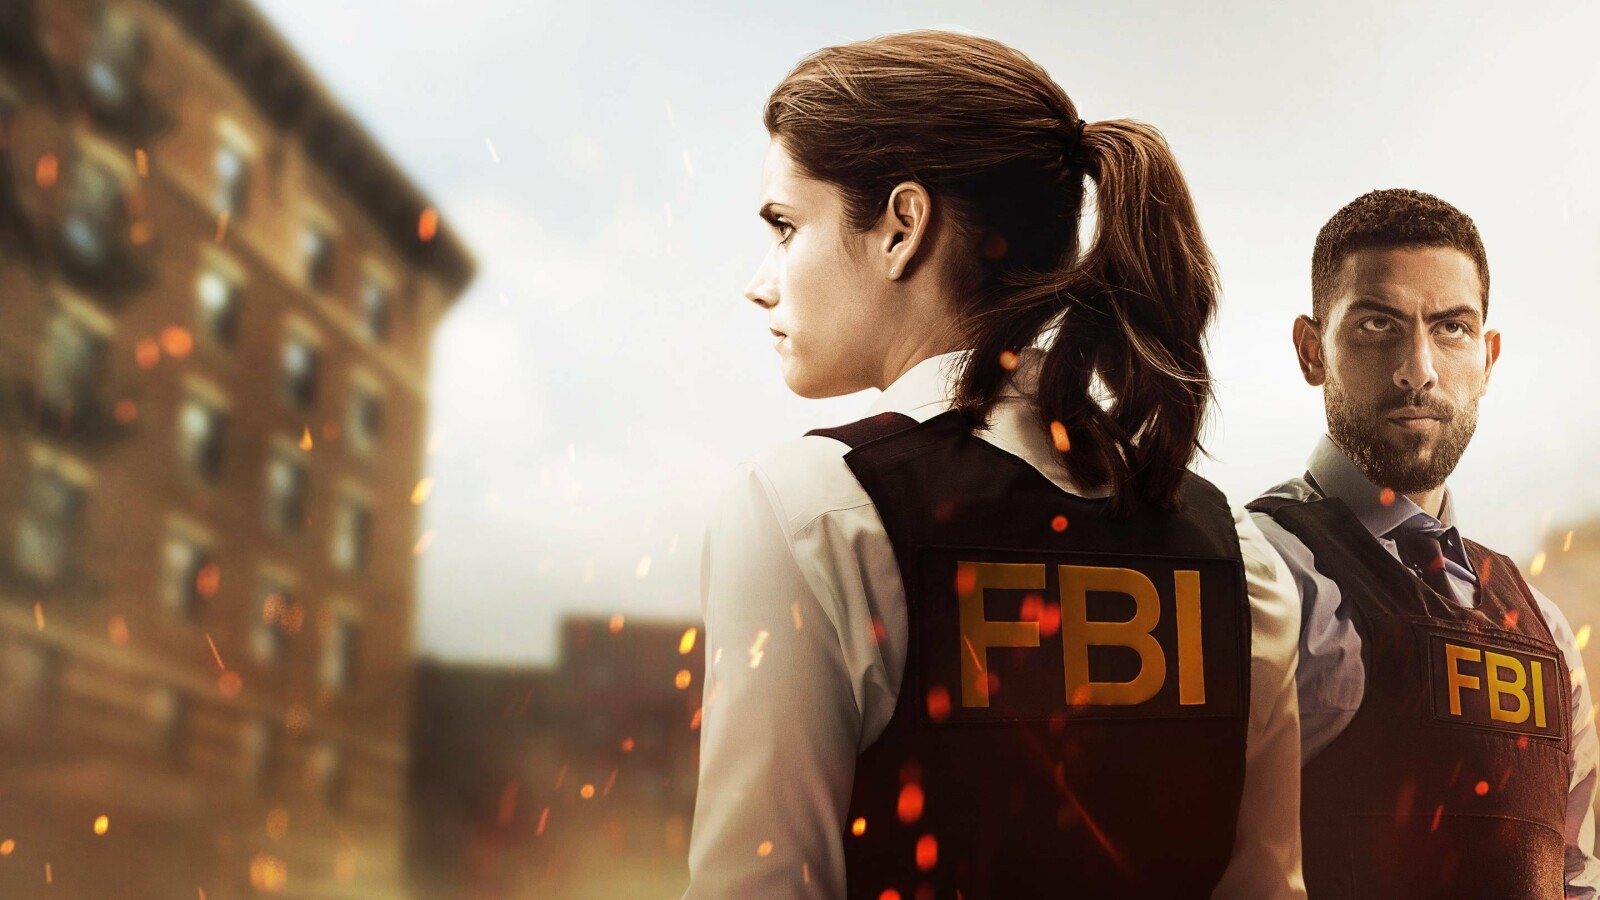 FBI CBS bestätigt Staffel 6 der USKrimiserie NETZWELT